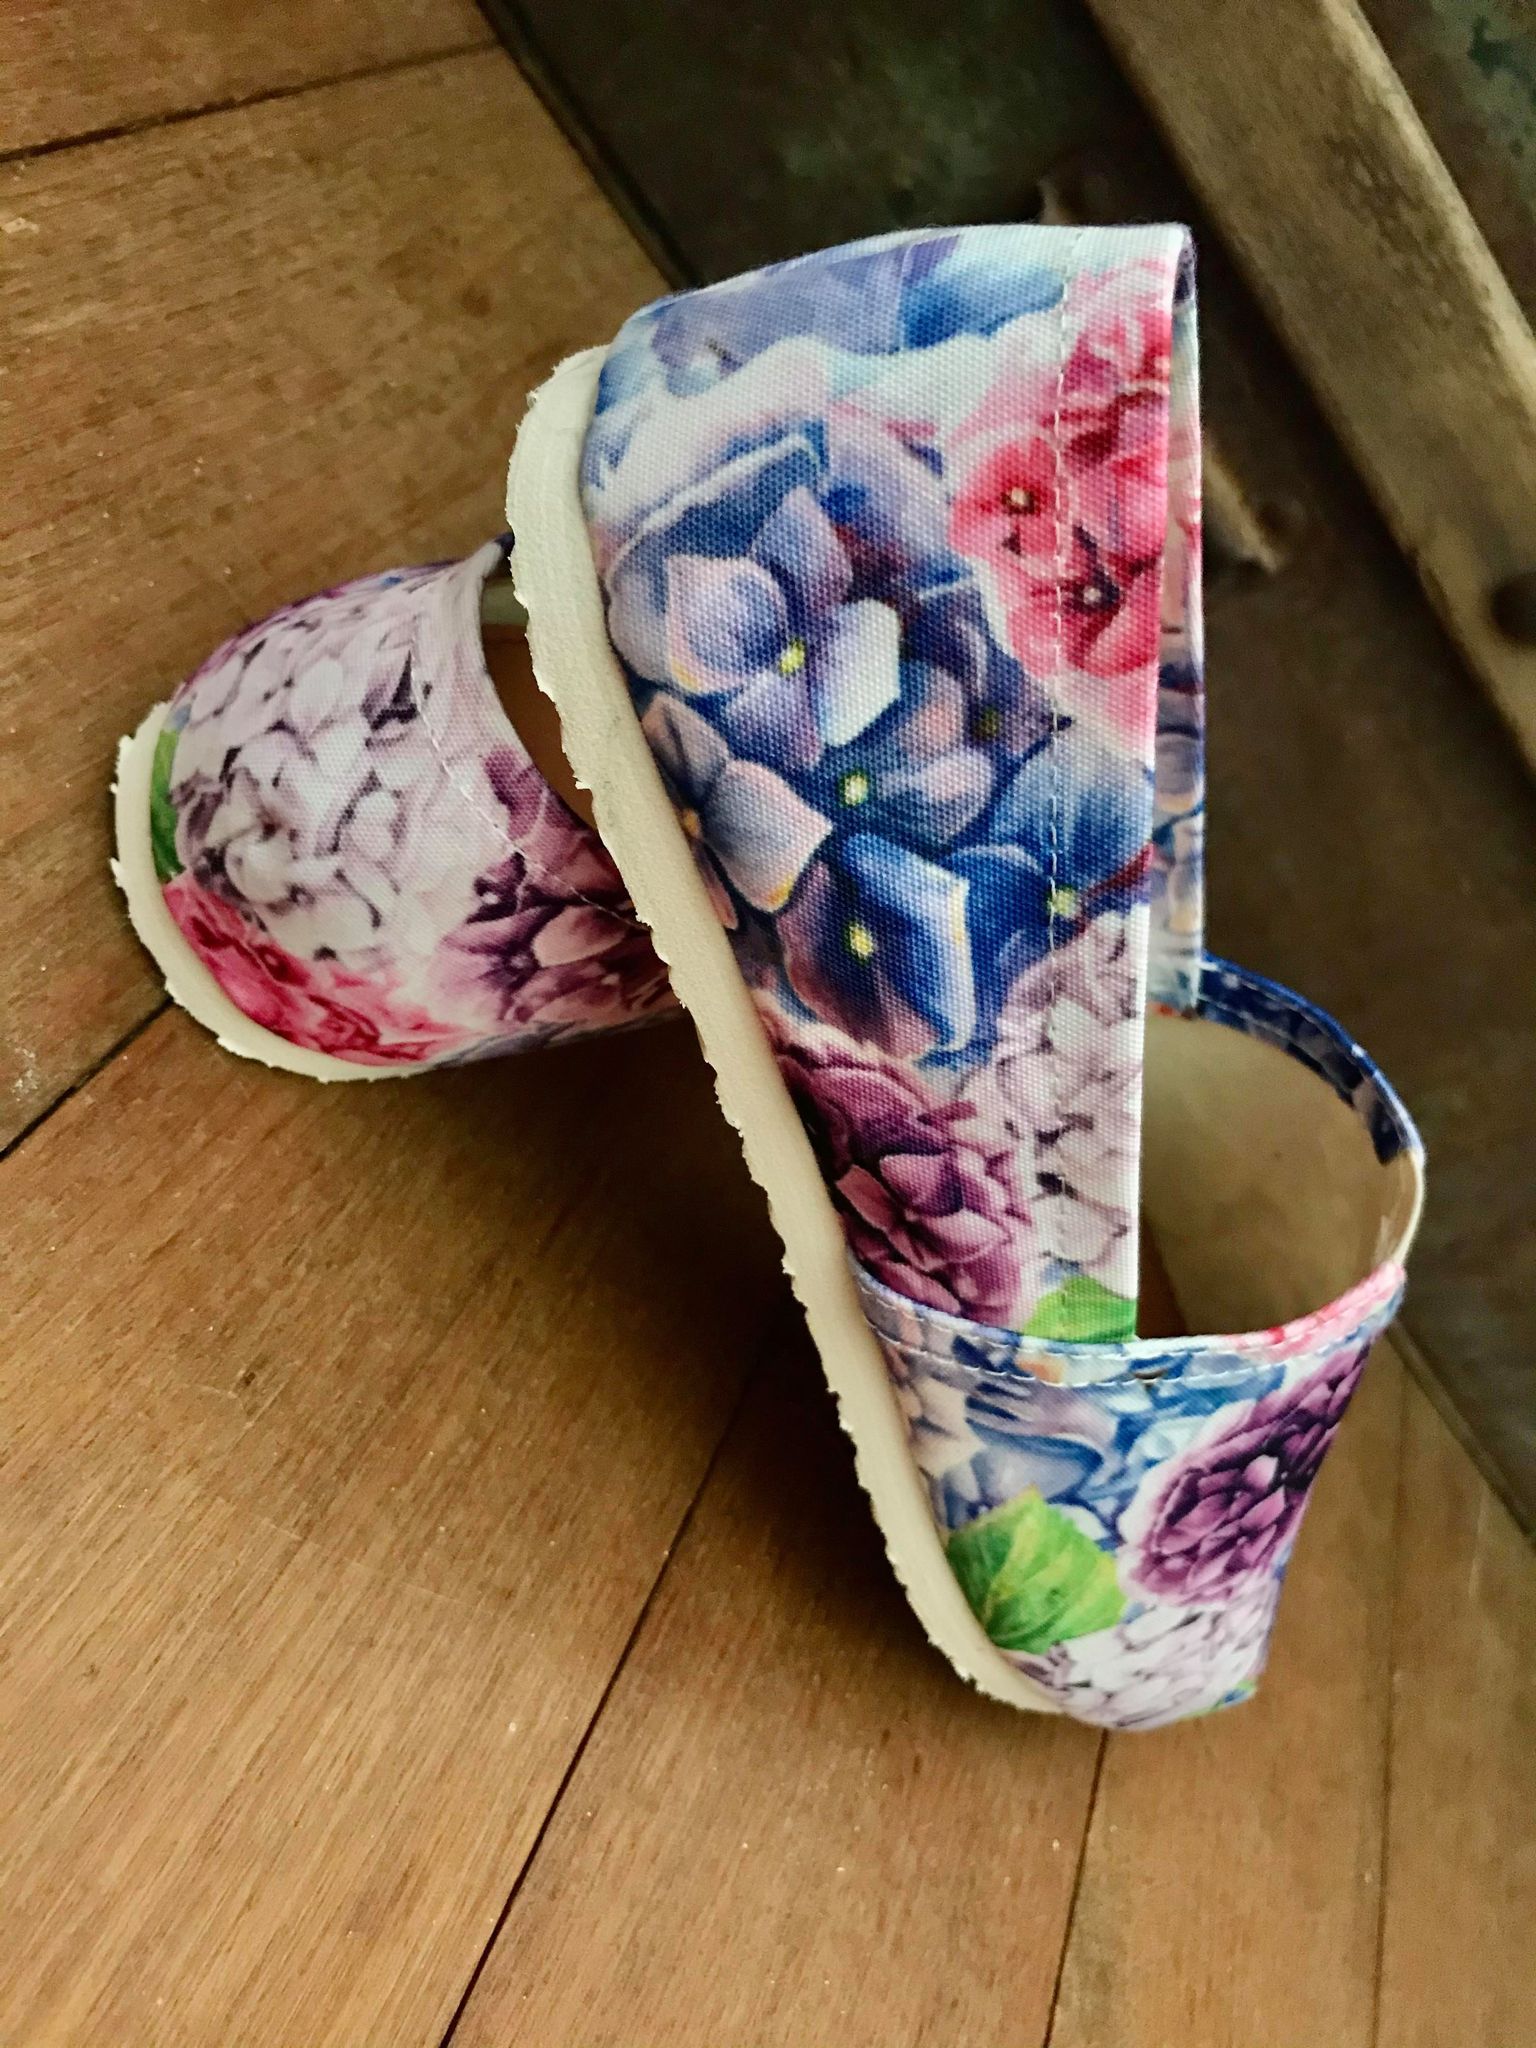 Hydrangeas - Casual Canvas Slip-on Shoes